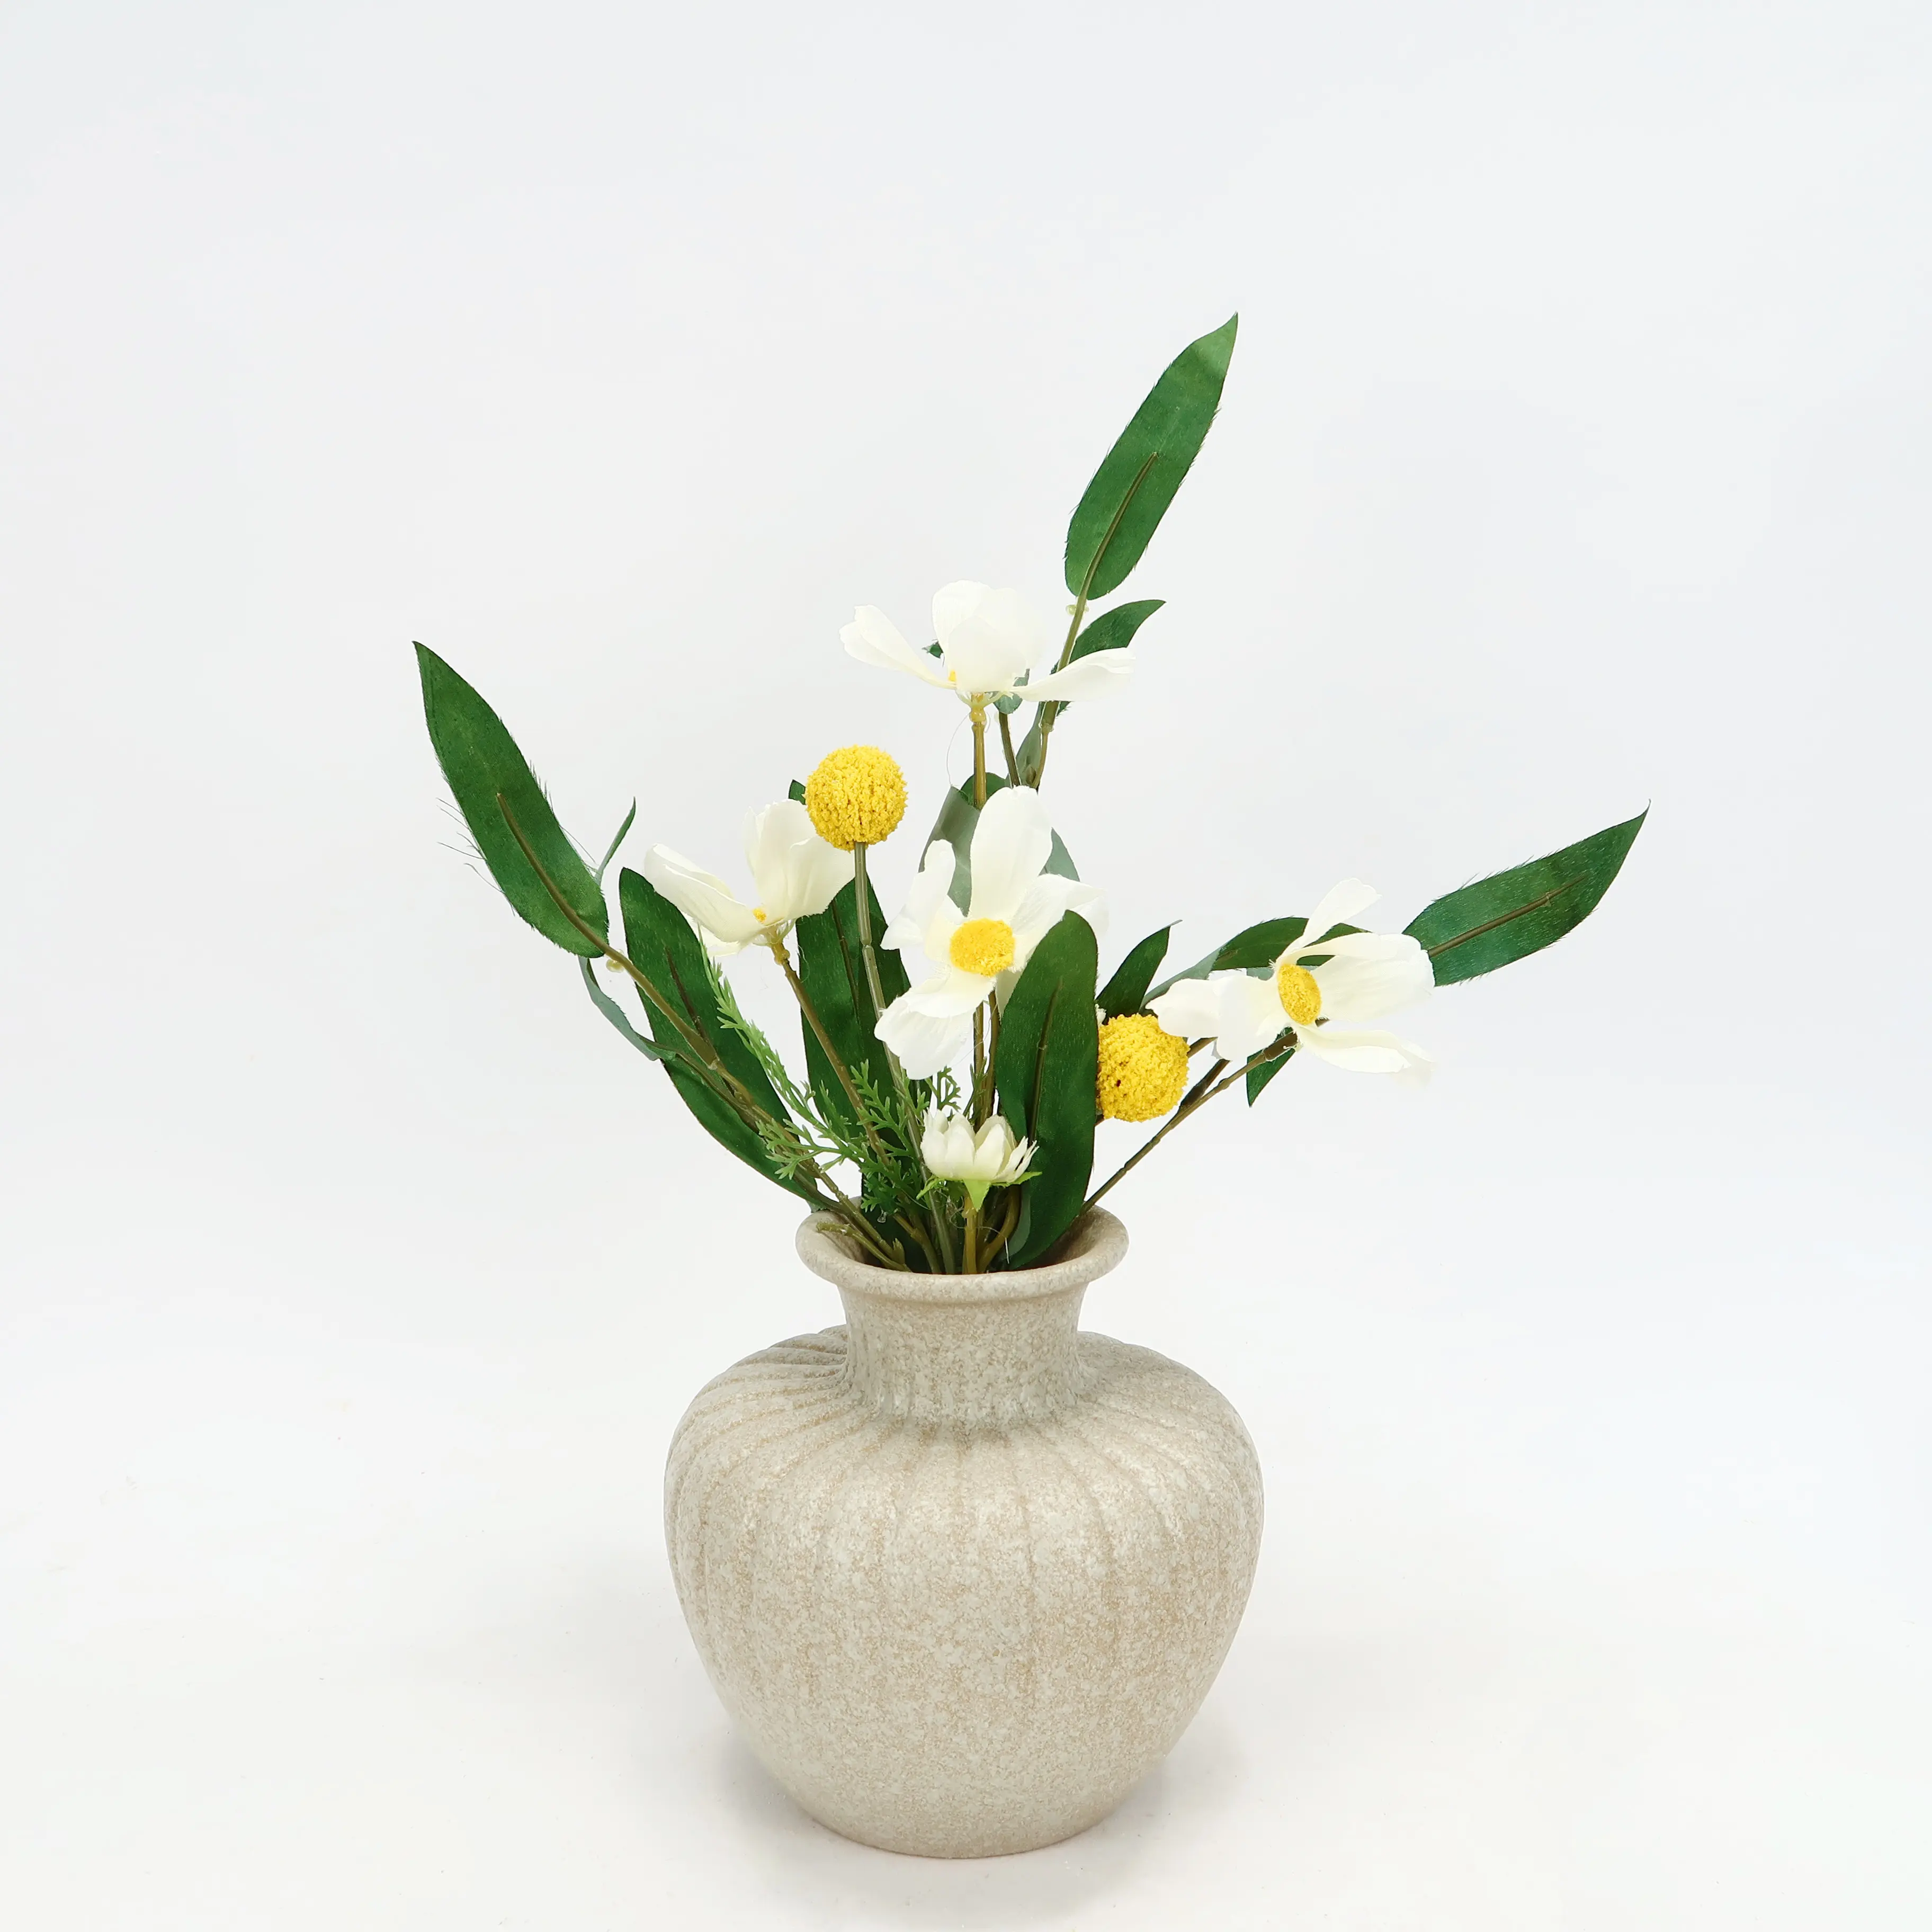 Retro Desktop Vase Luxury Modern Minimalist Office Living Room Home Dried Flowers Decoration Ceramic Vase